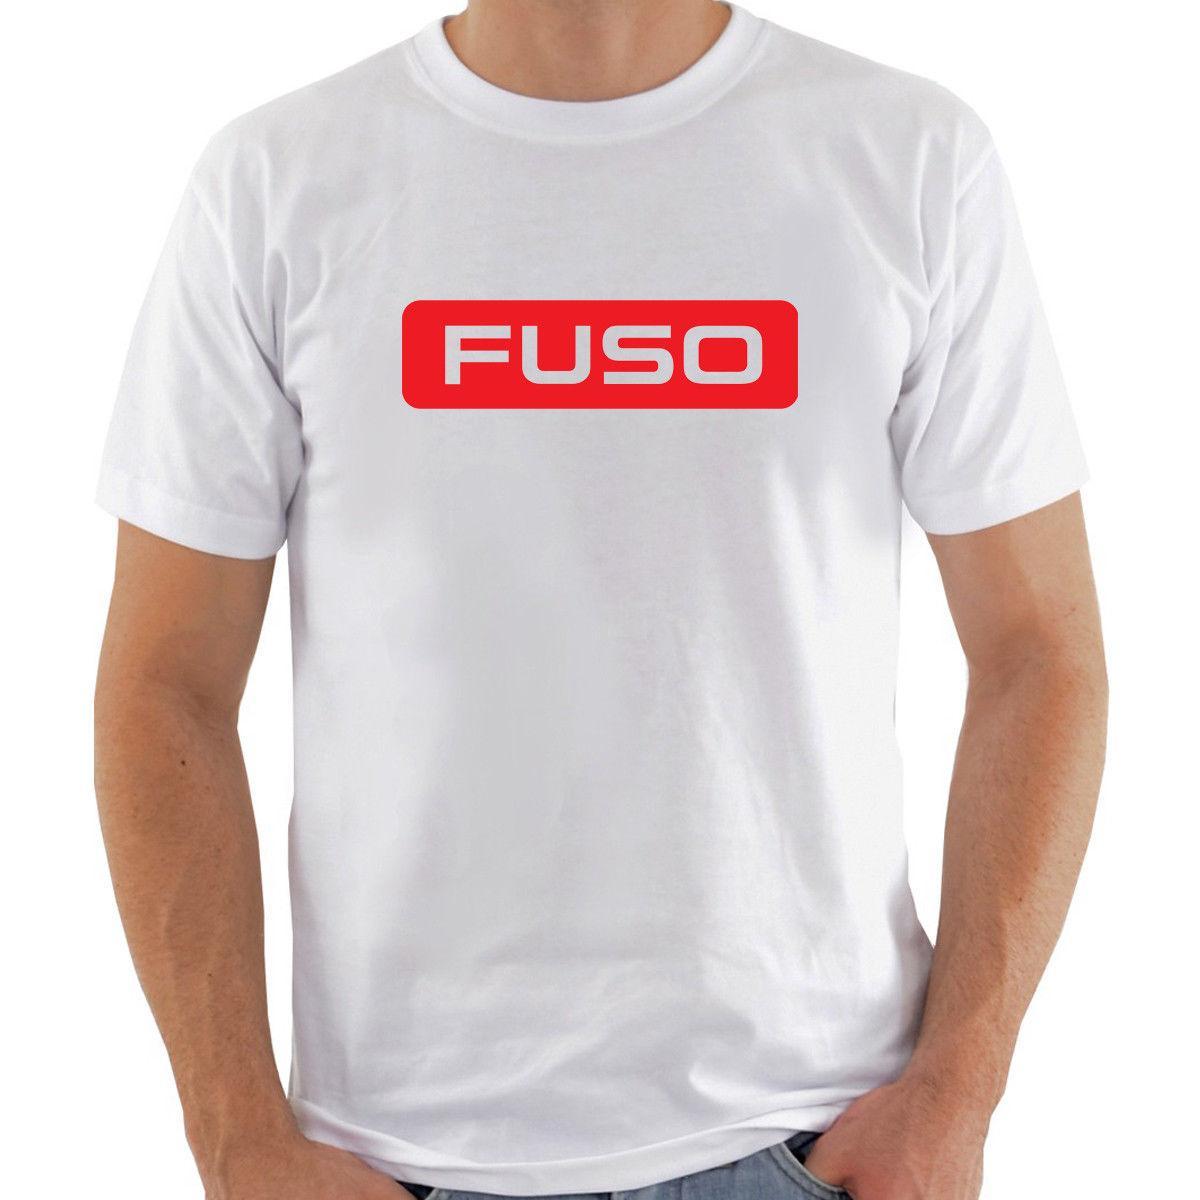 Fuso Logo - FUSO LOGO FAMOUS Men White T Shirt 100% Cotton Graphic Casual Male